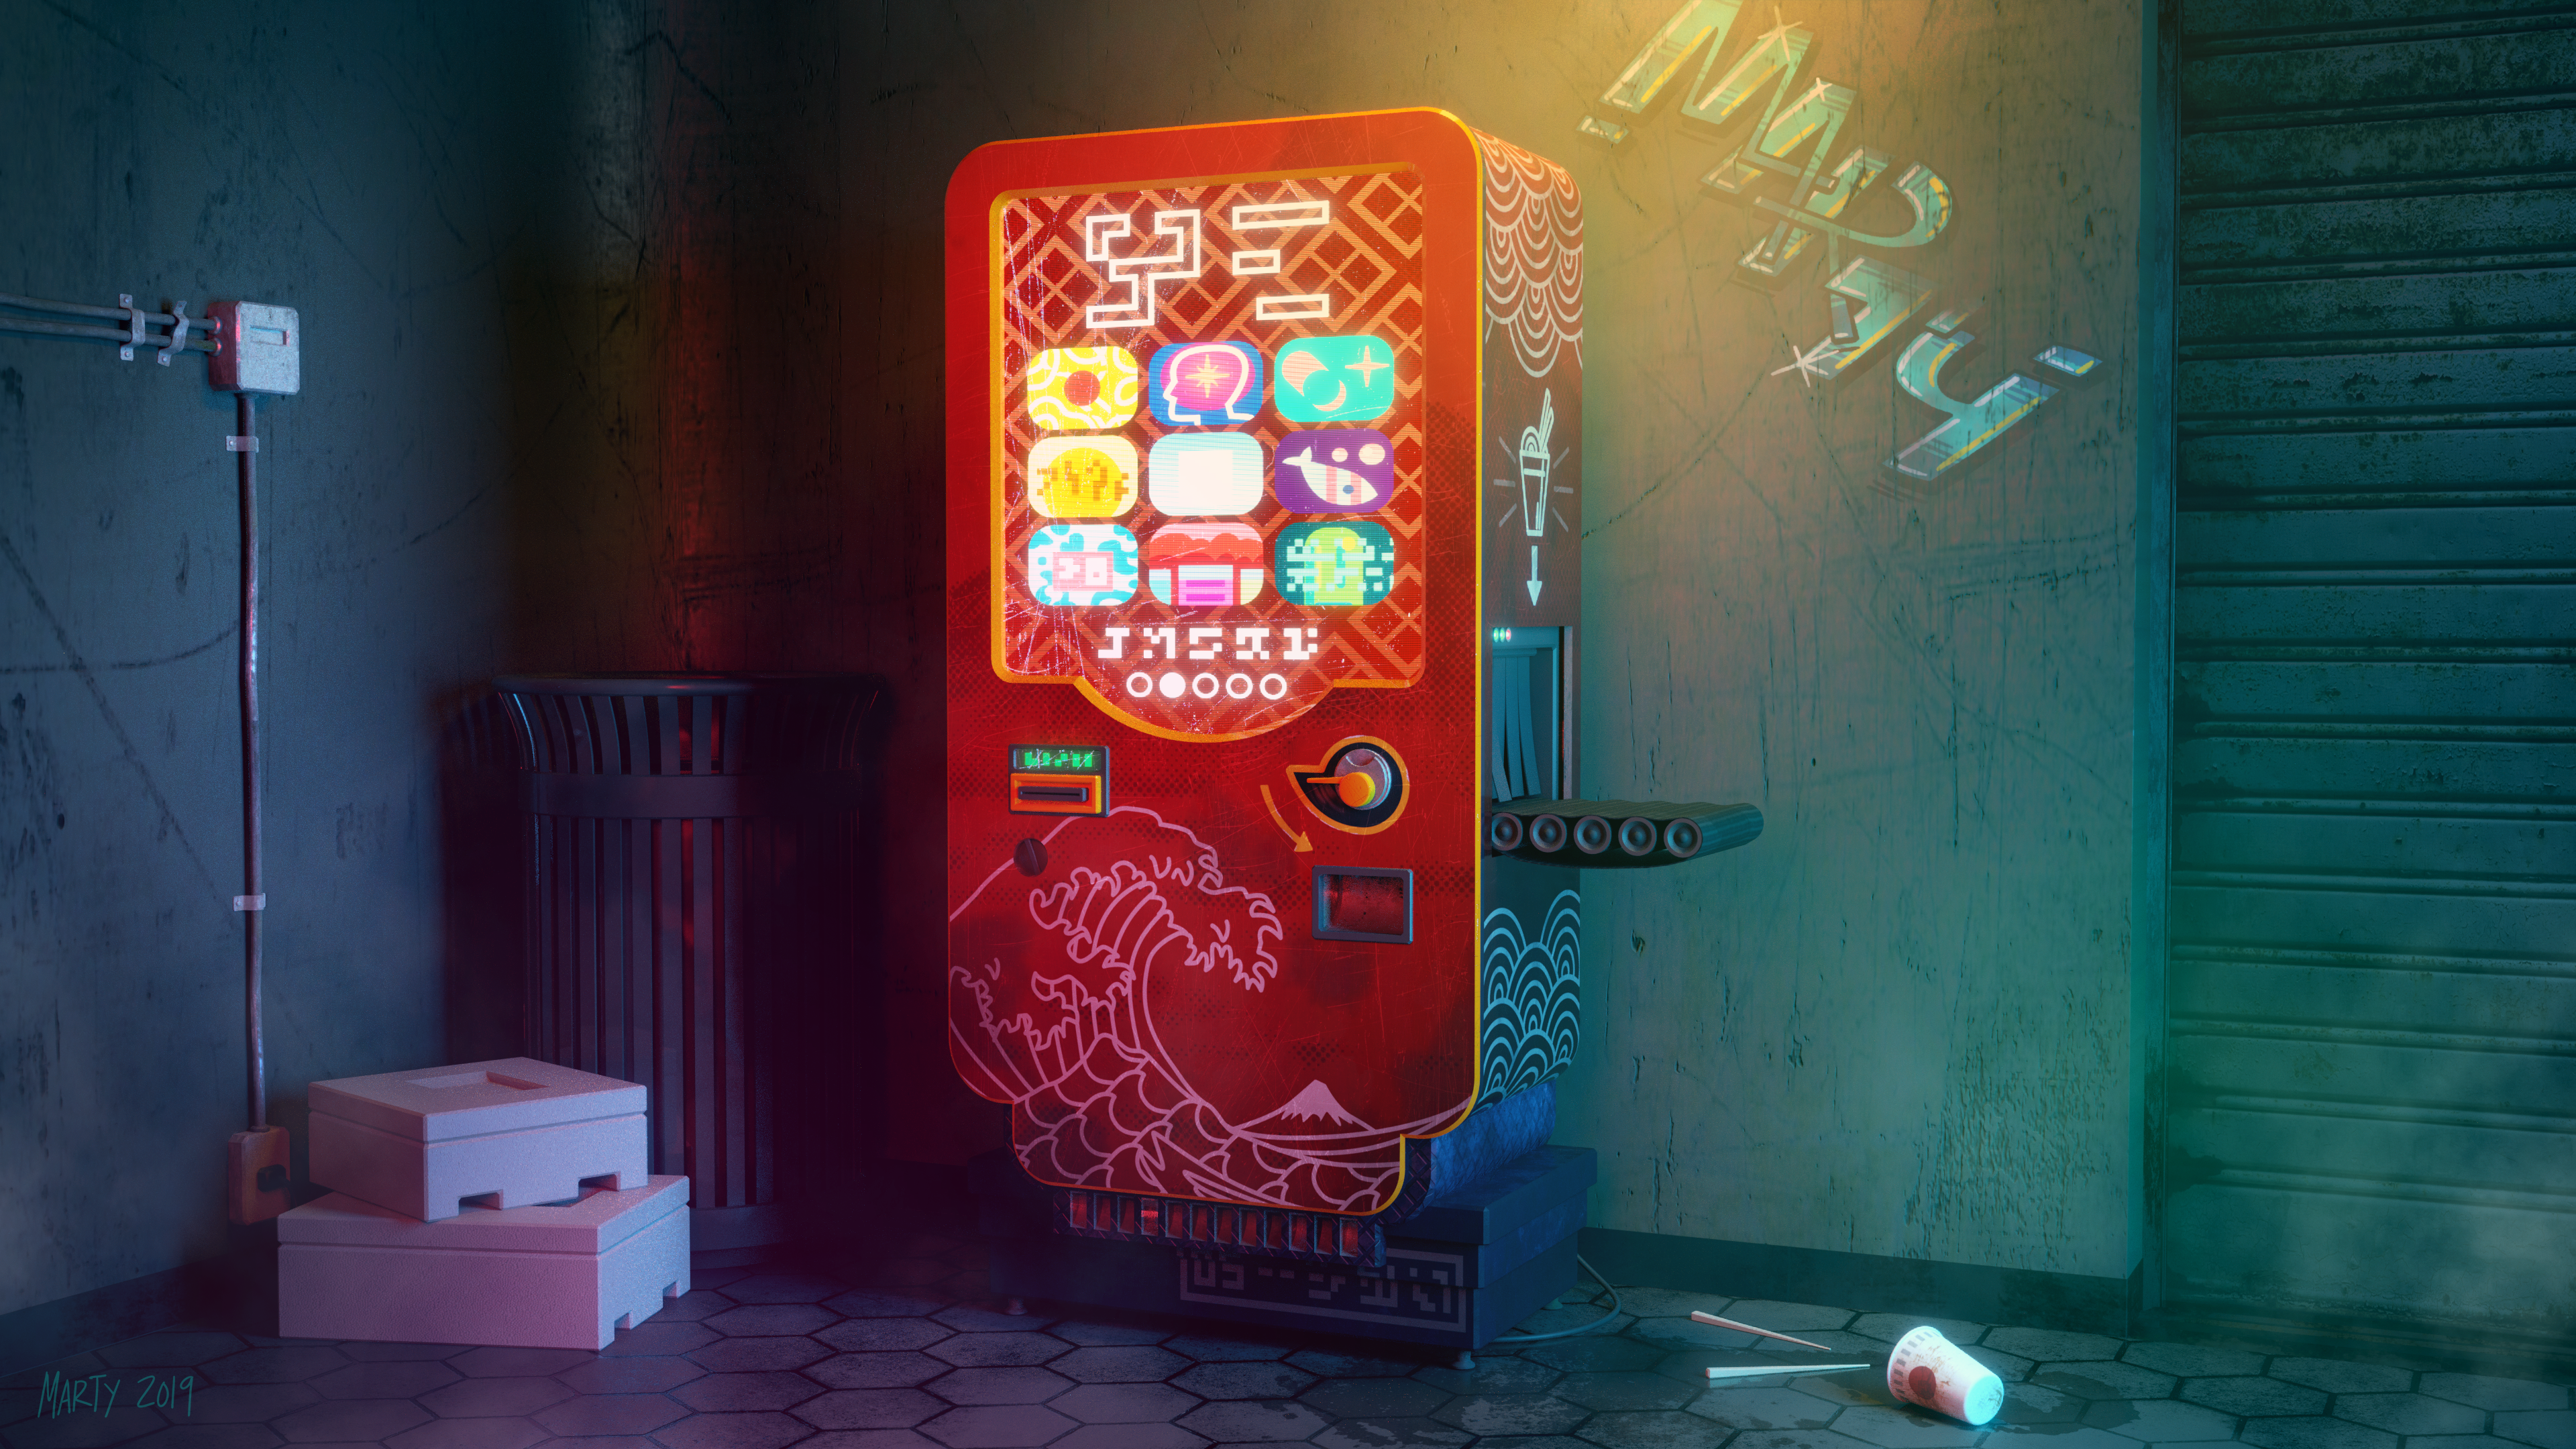 Cyberpunk vending machine 4k Ultra HD Wallpaper Background Image